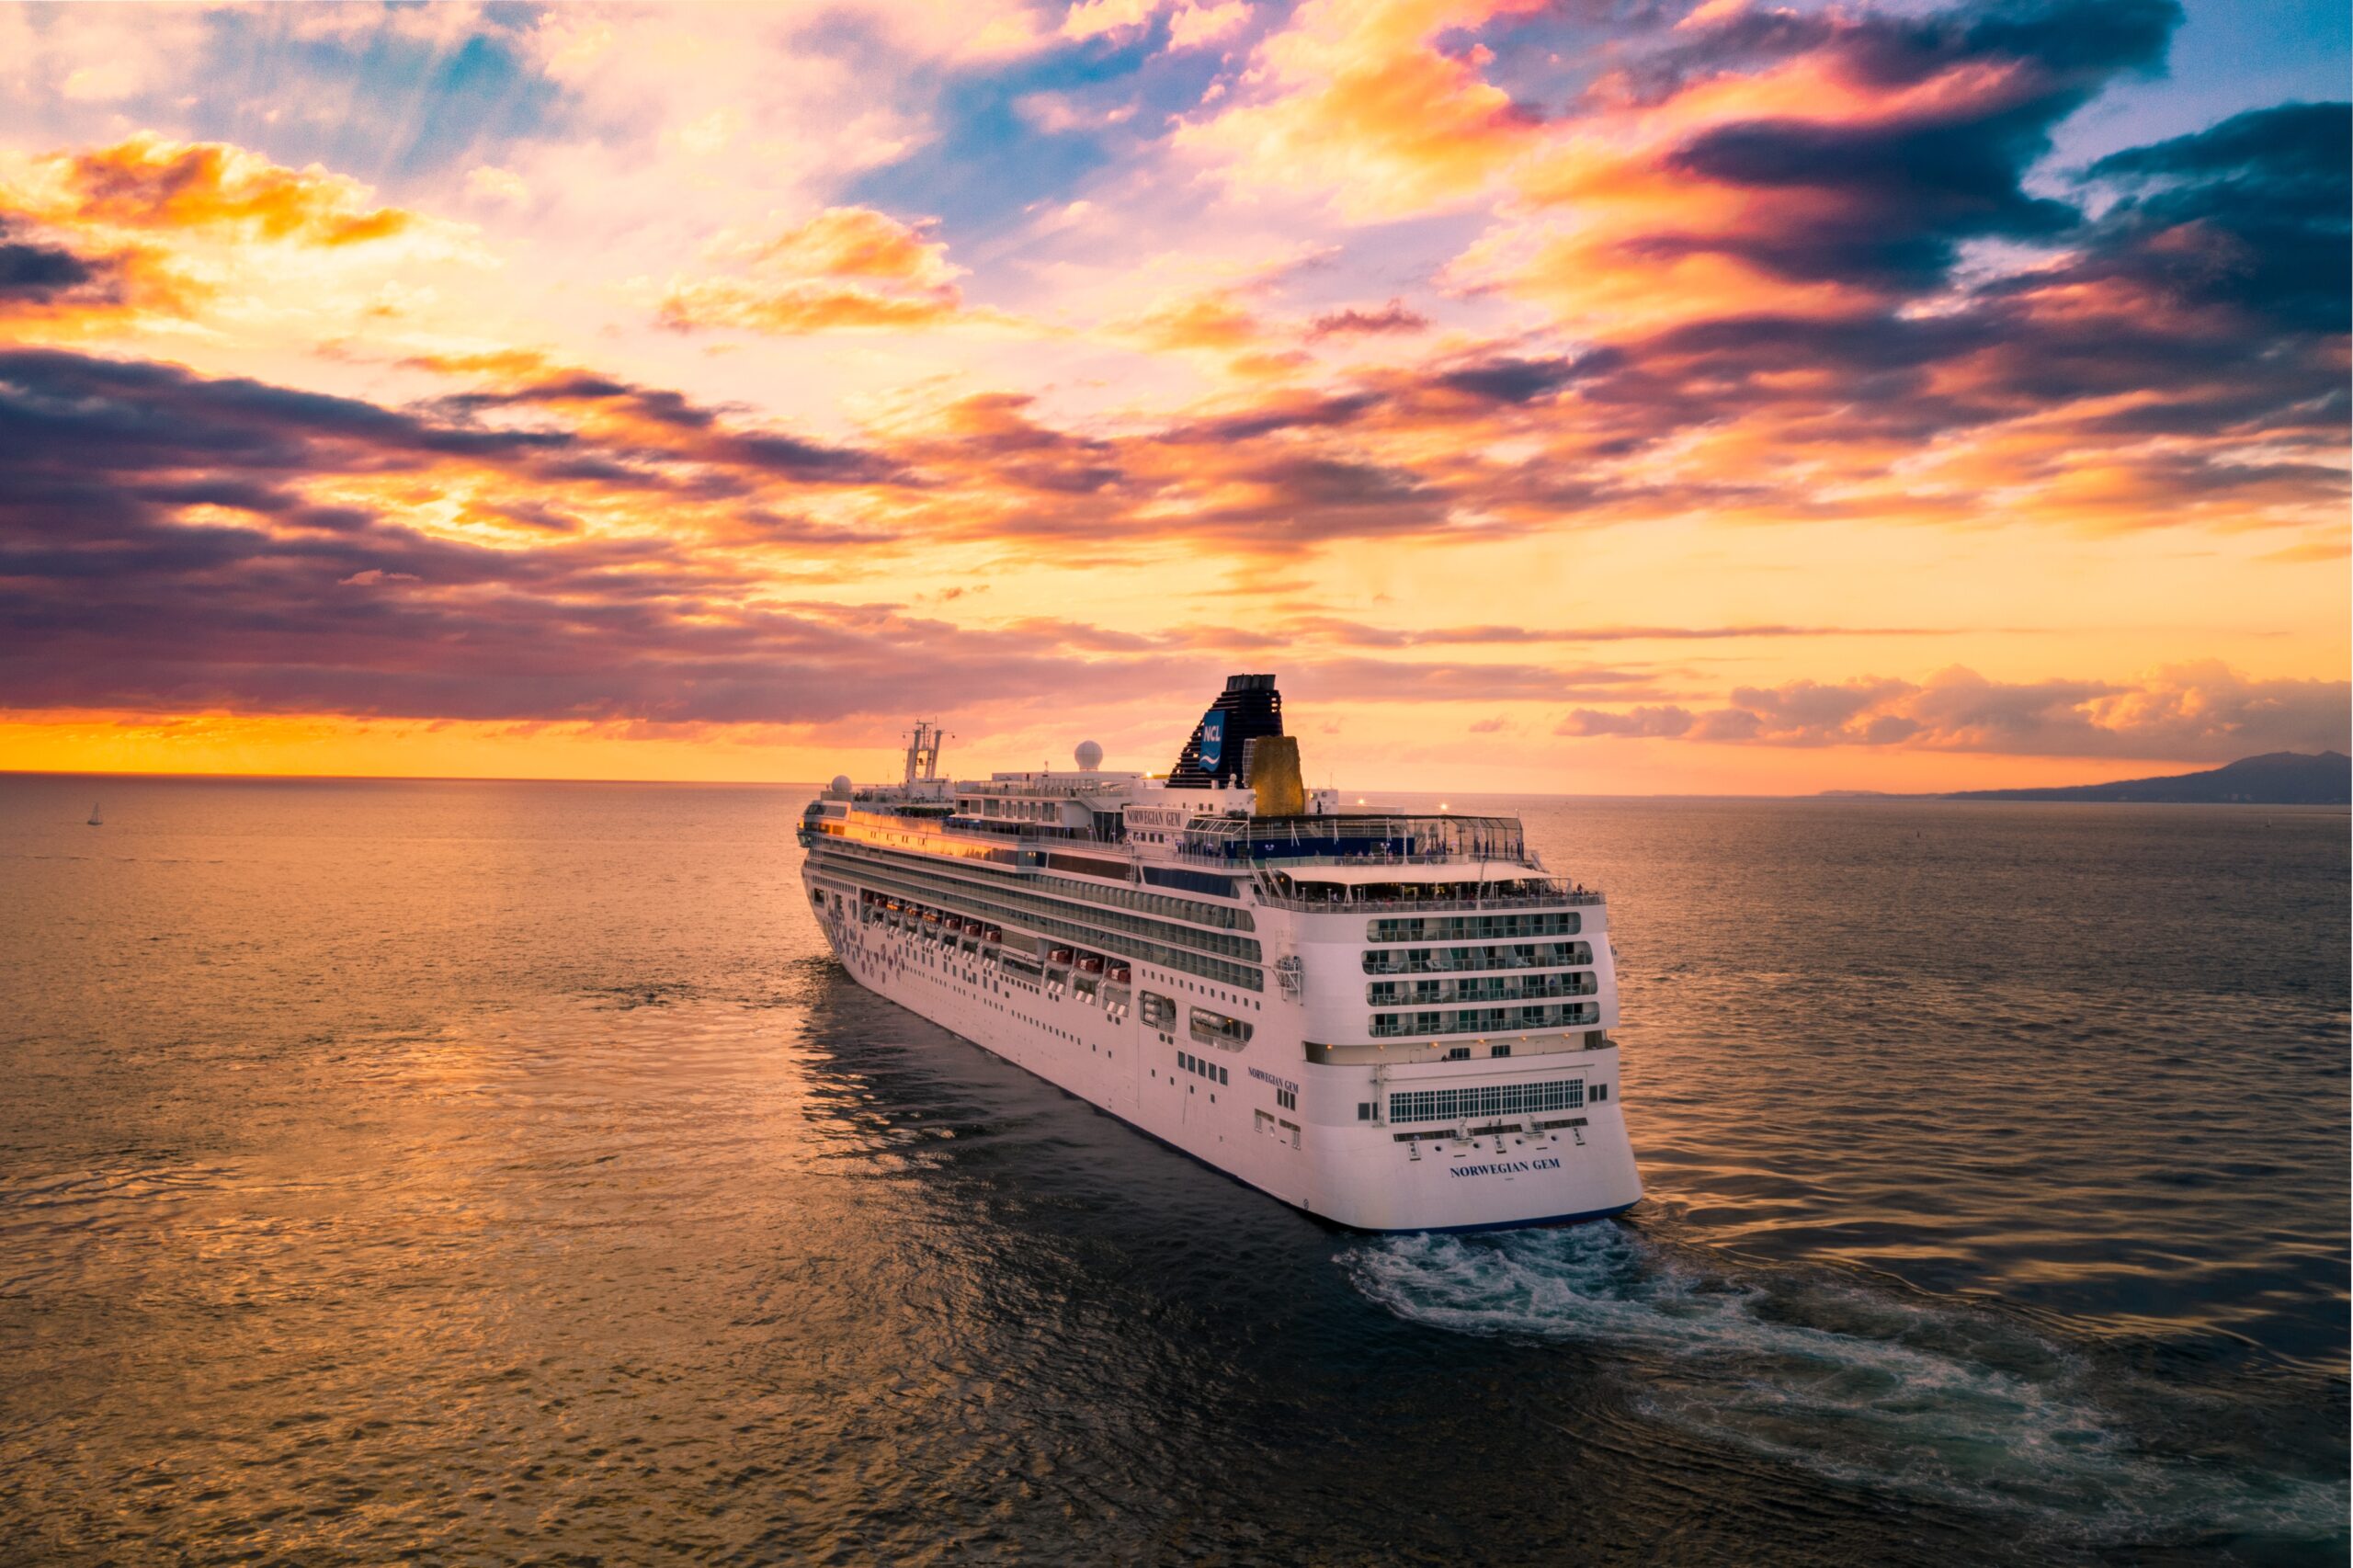 Are Gratuities Included In The Cruise Fare?